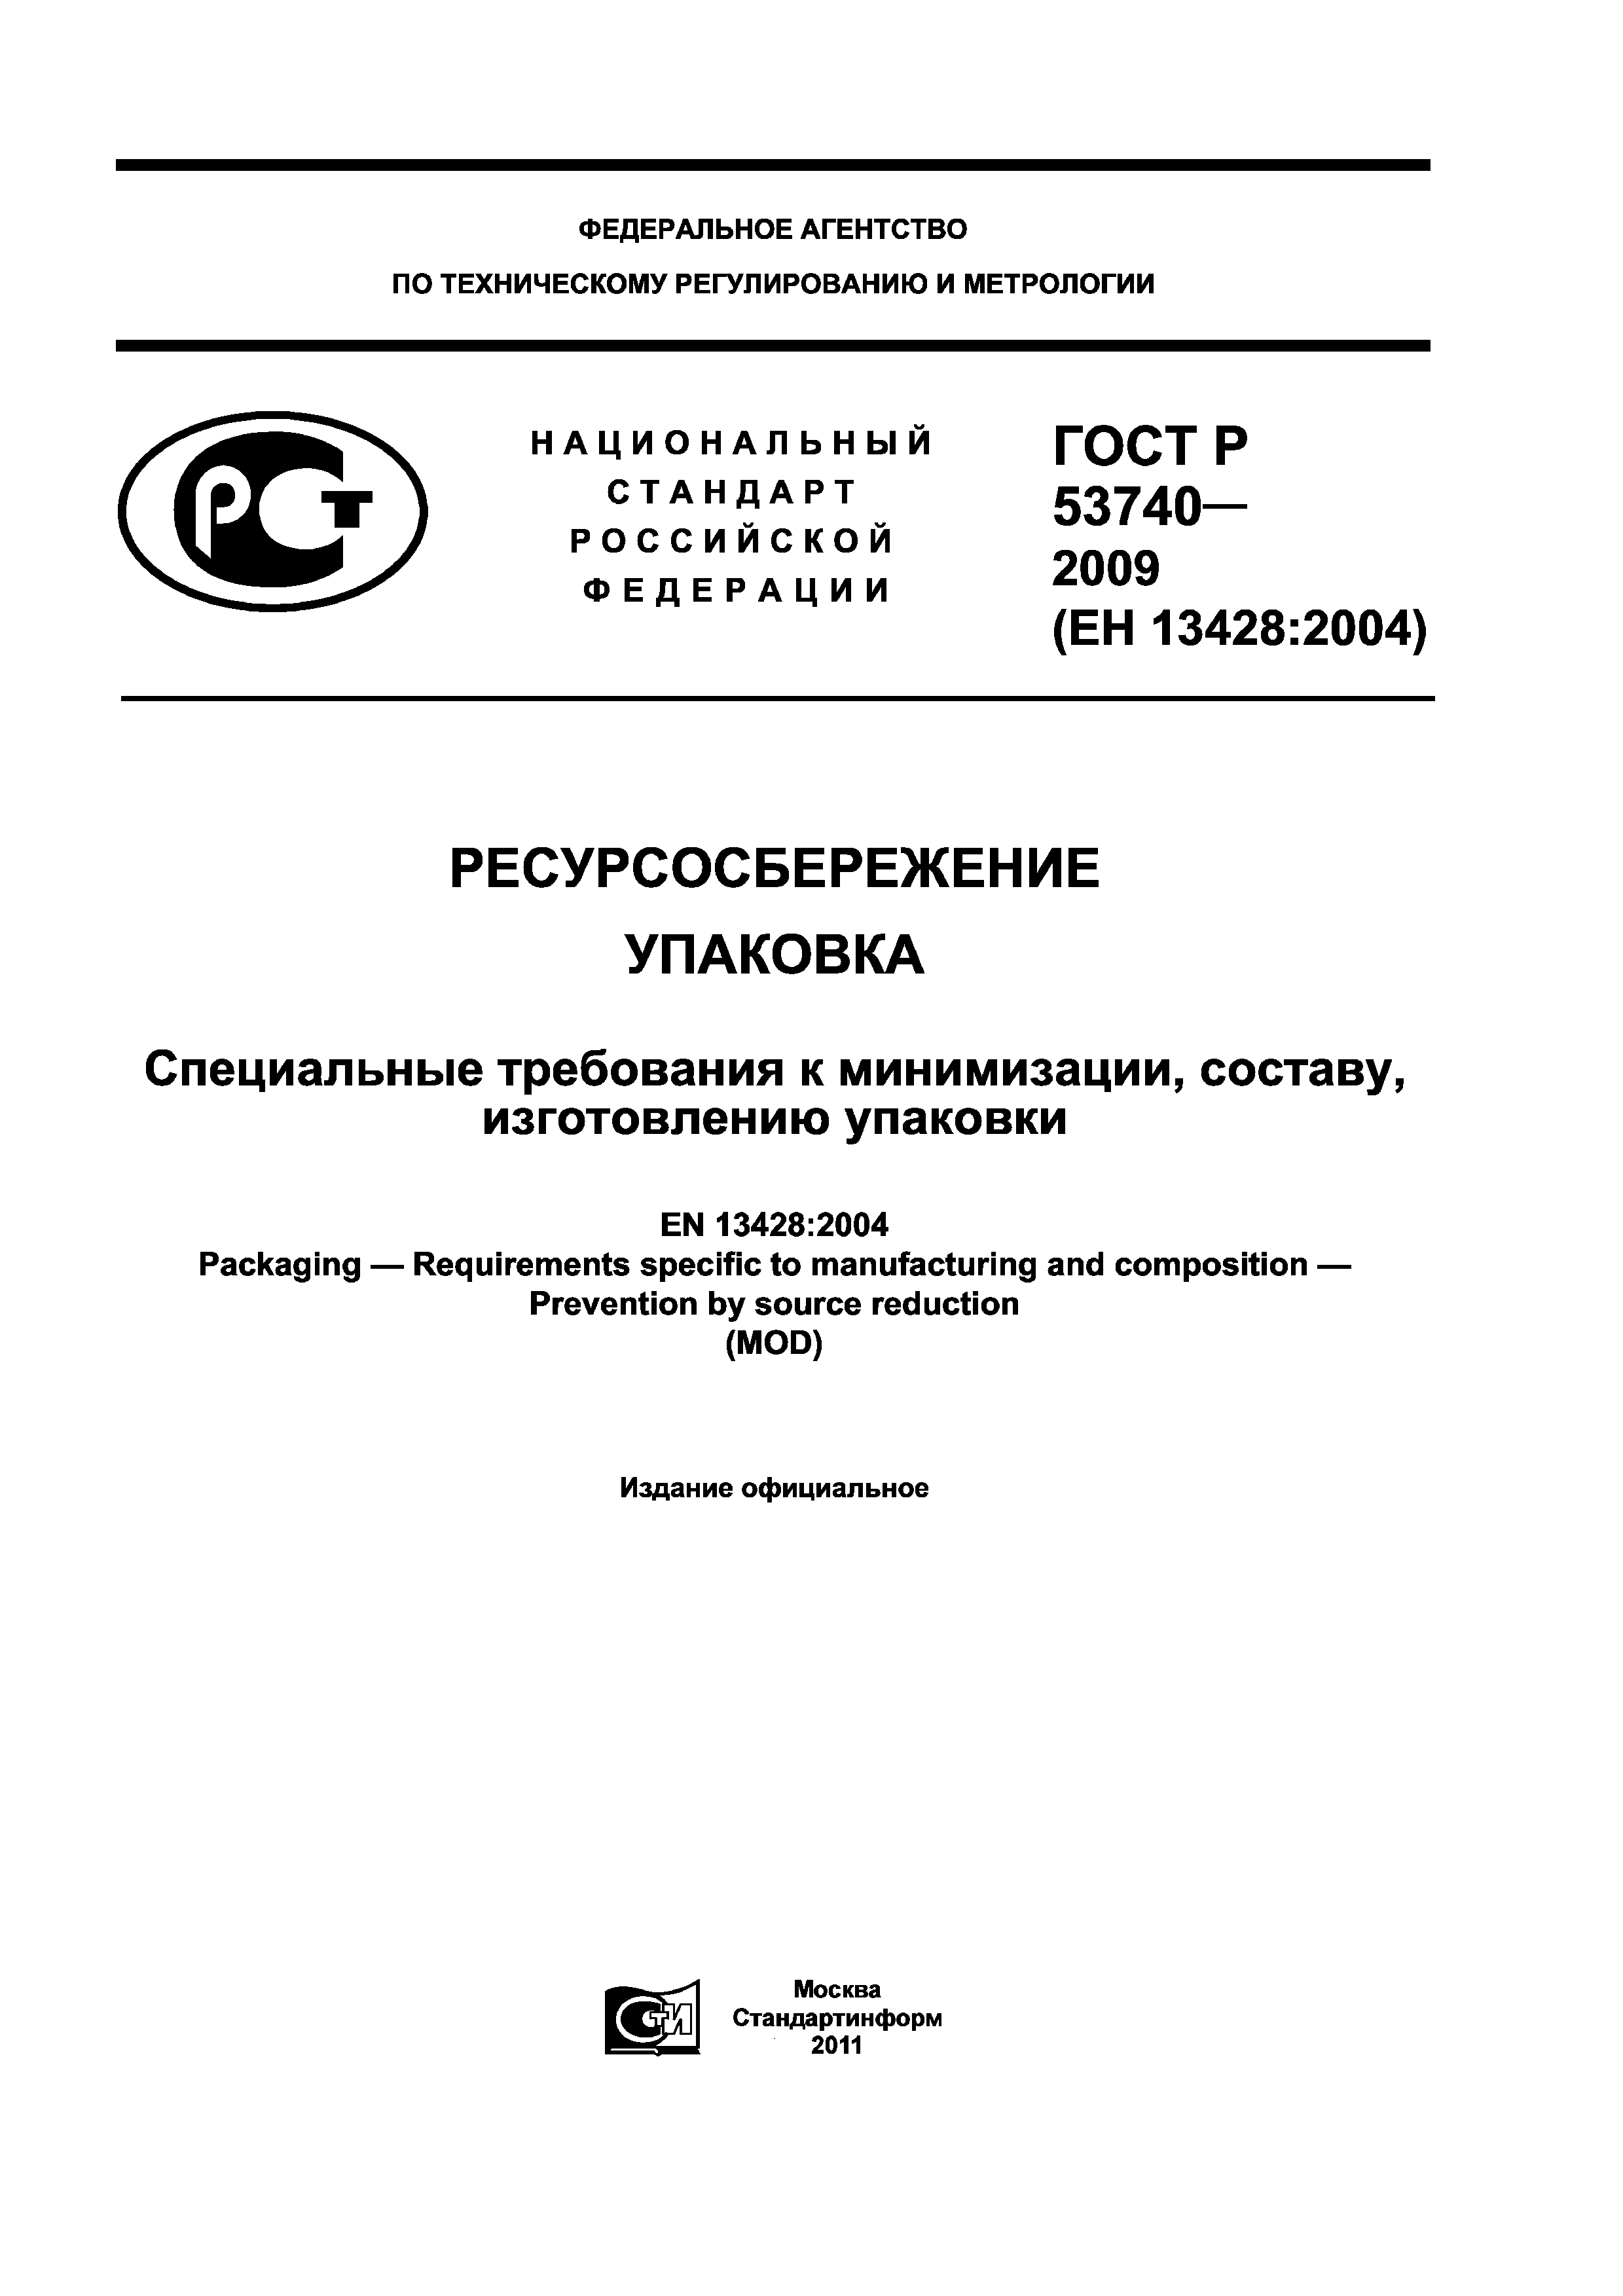 ГОСТ Р 53740-2009